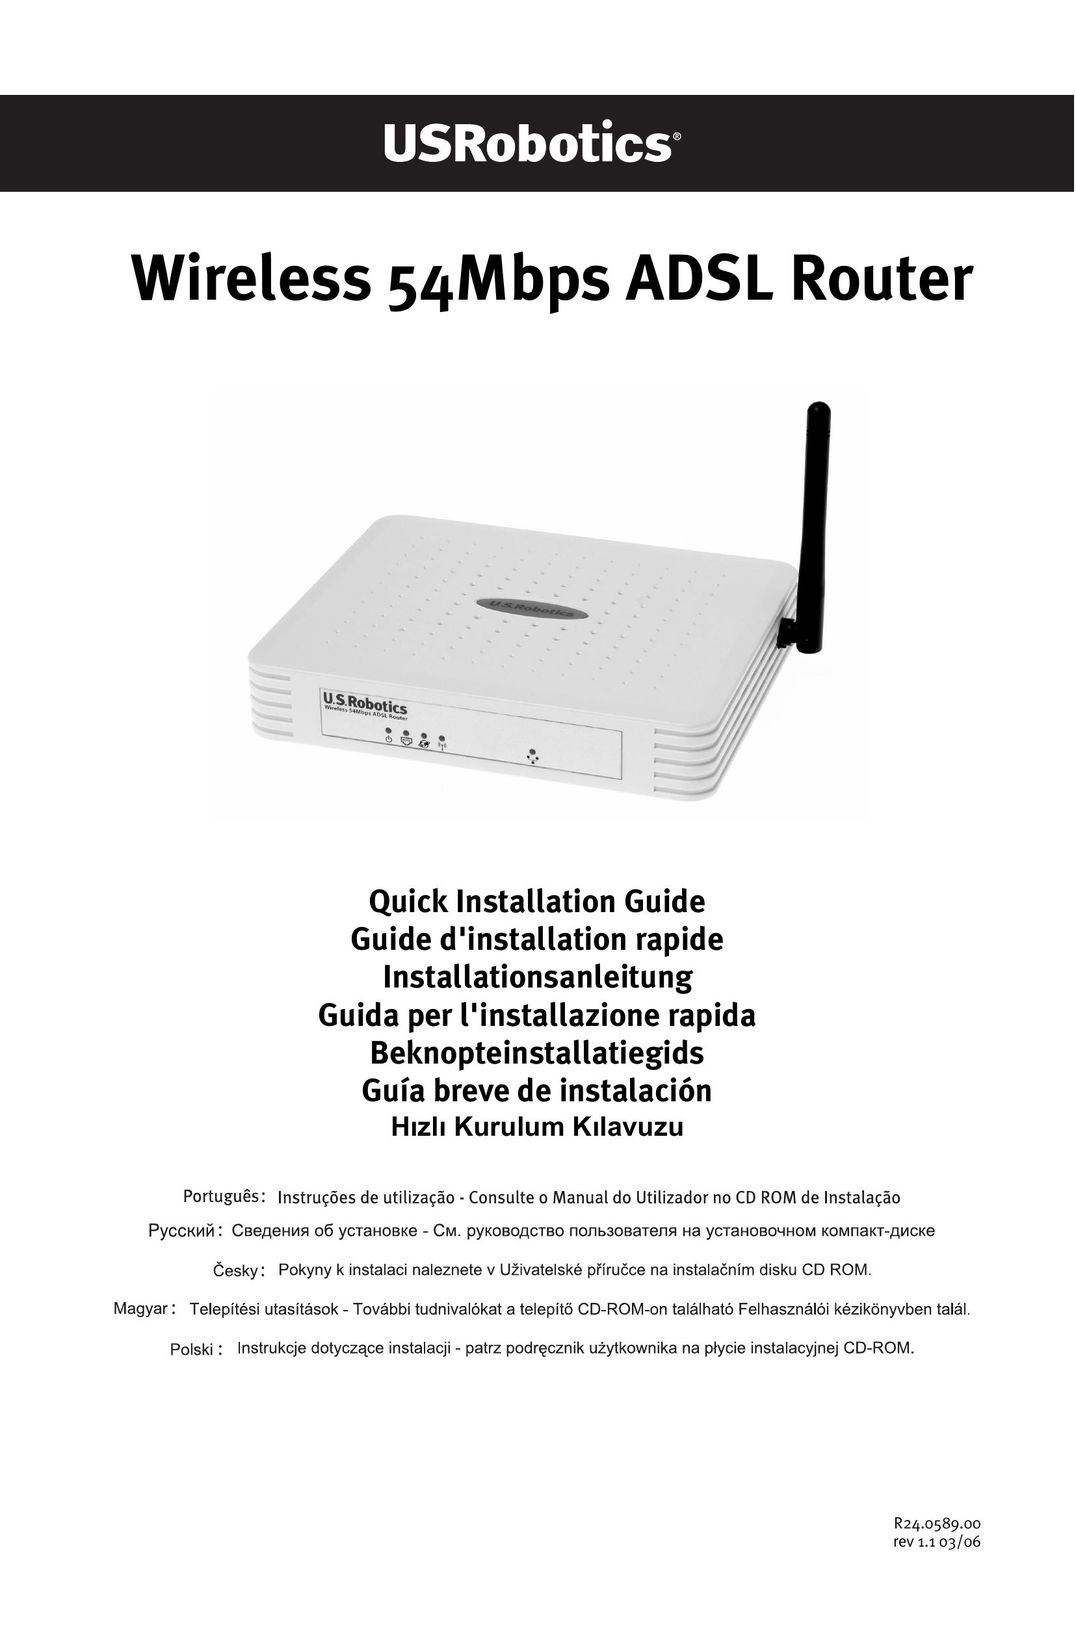 USRobotics Wireless 54Mbps ADSL Router Network Router User Manual